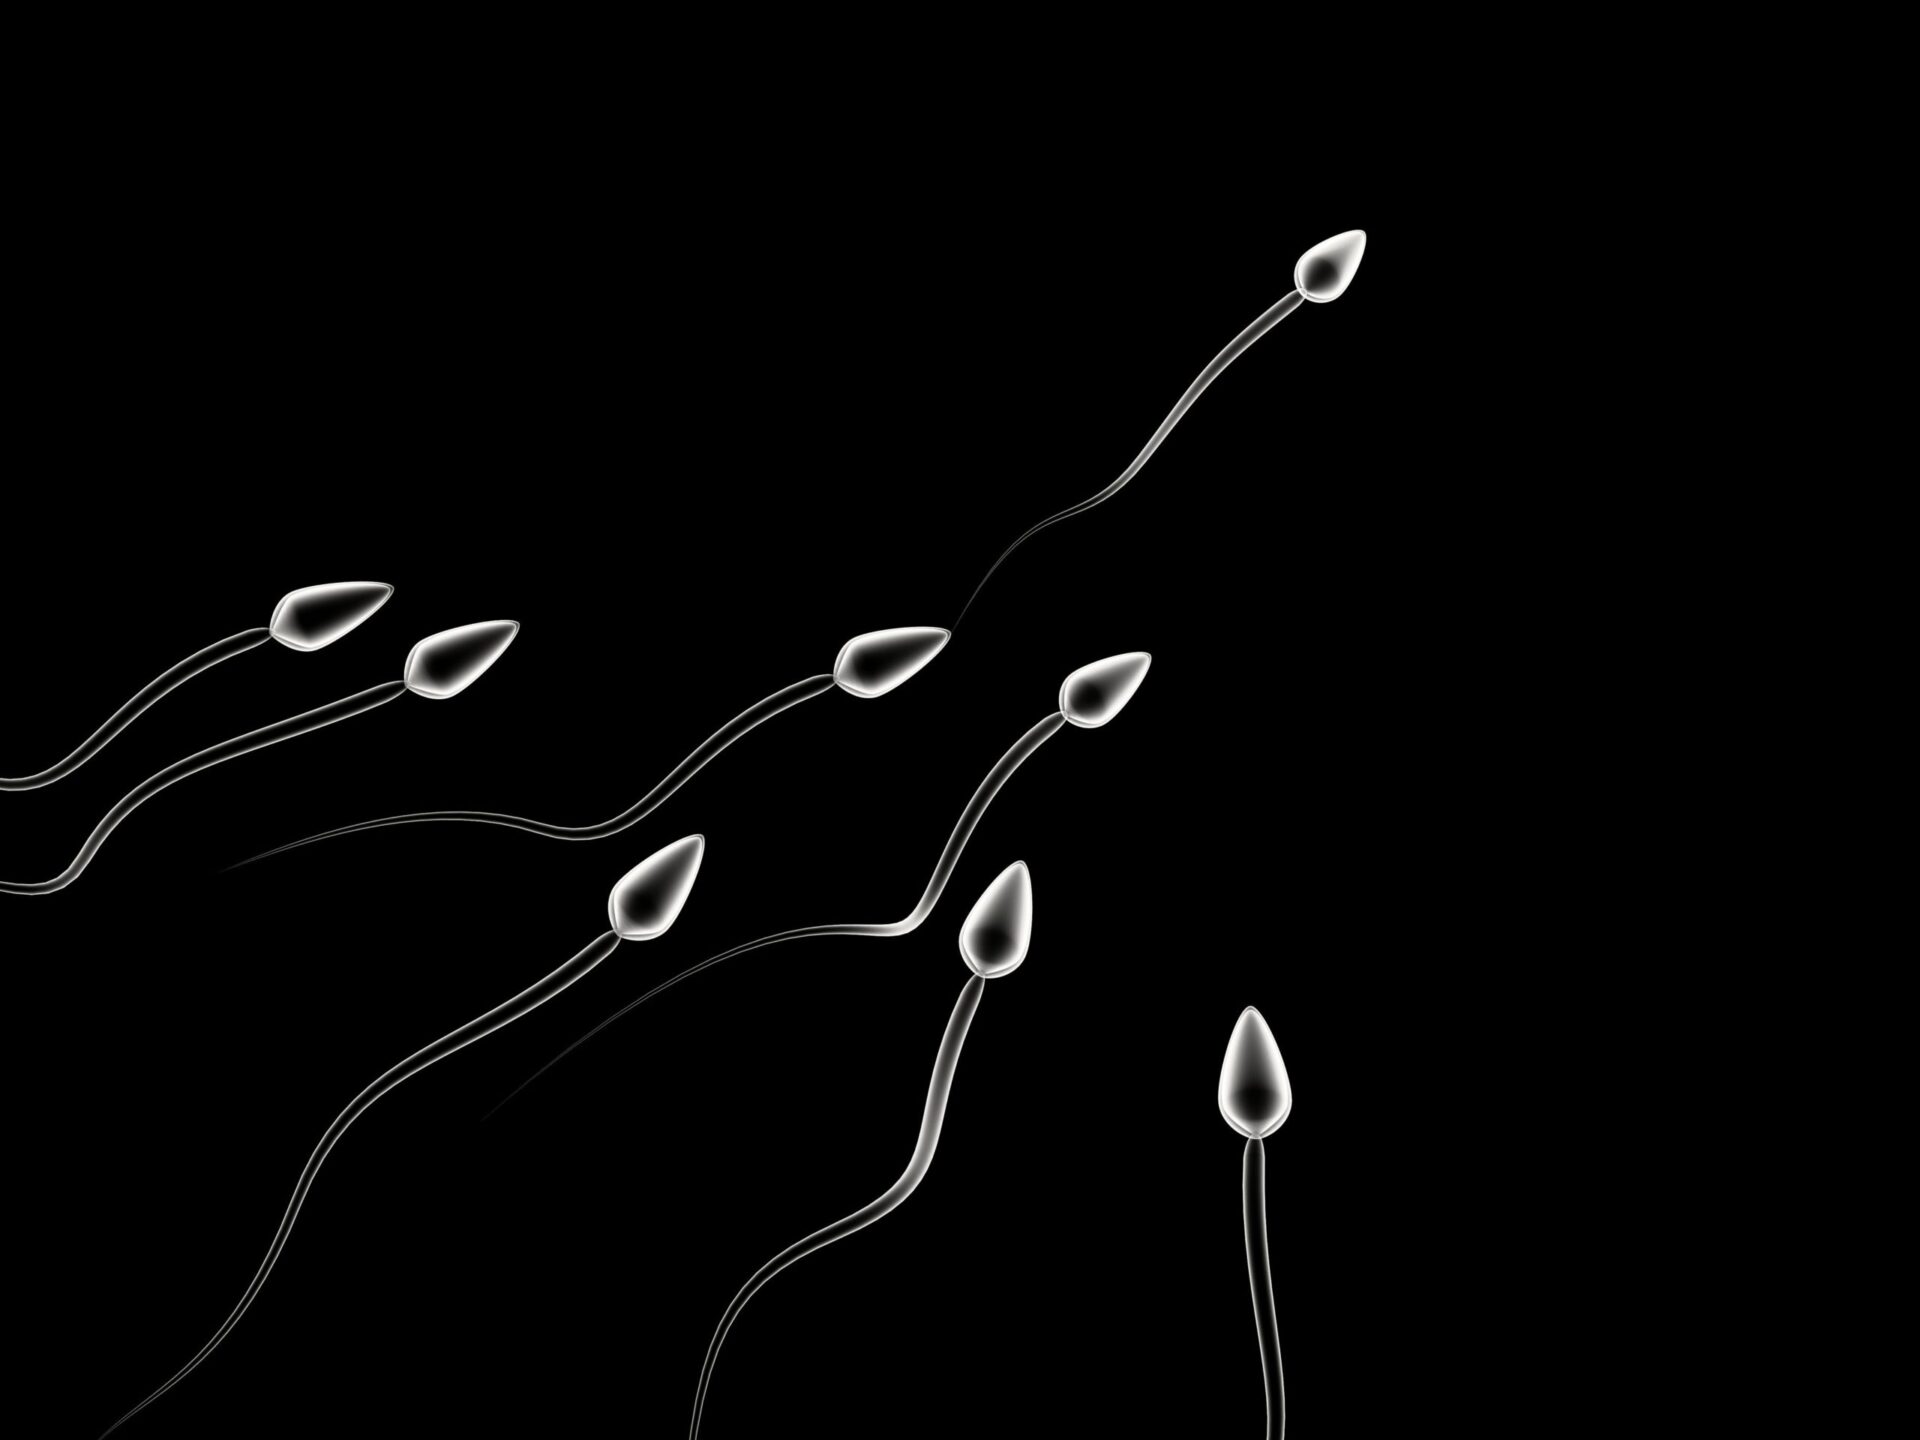 Sperm Found in 37% of Azoospermic Patients